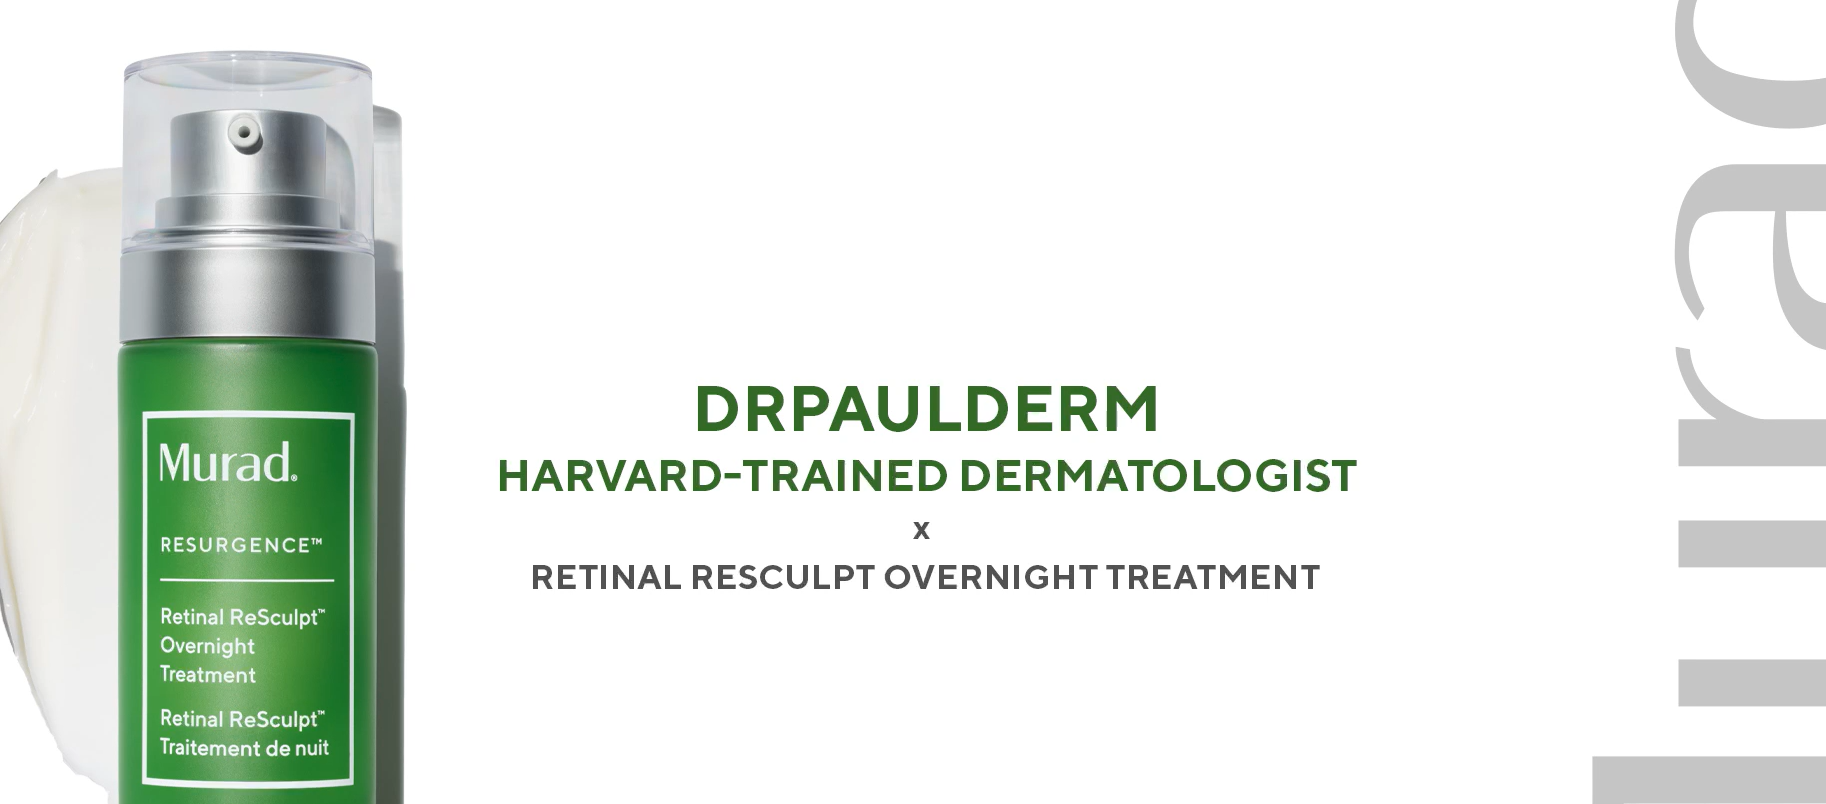 dr paul derm x retinal resculpt overnight treatment thumbnail